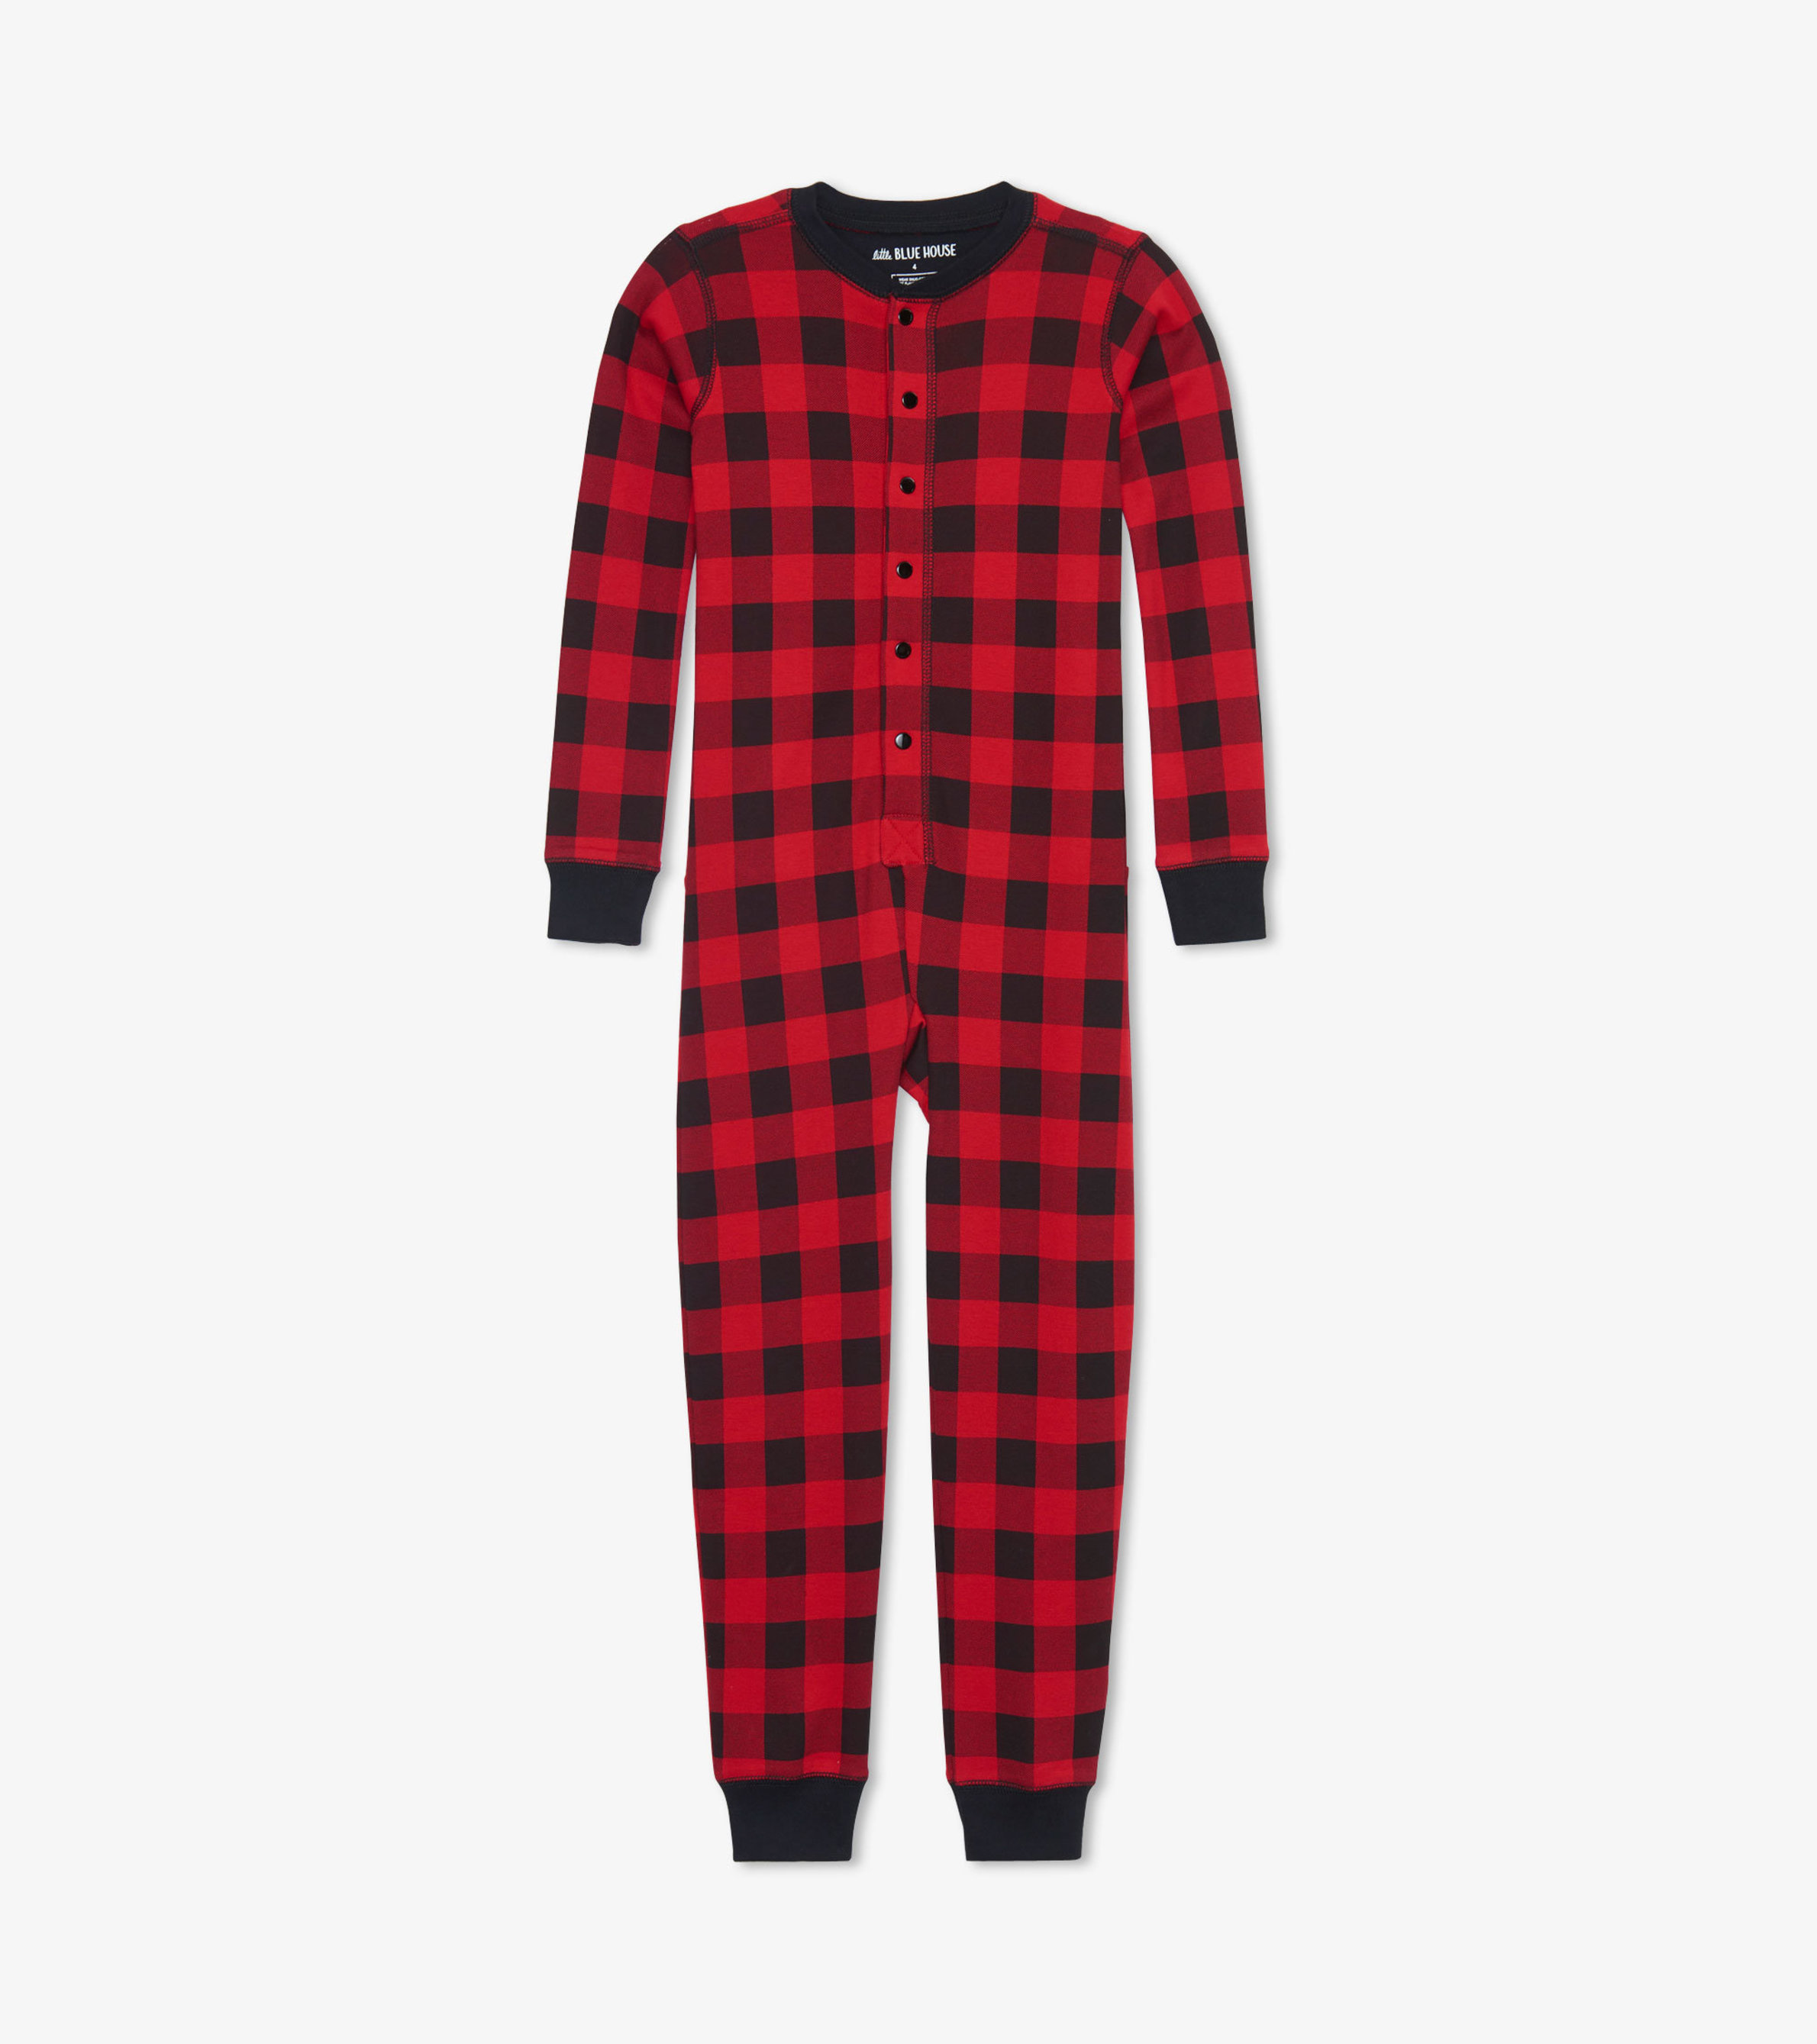  Plaid Moose Lumberjack Red Black Unisex Pajamas Set